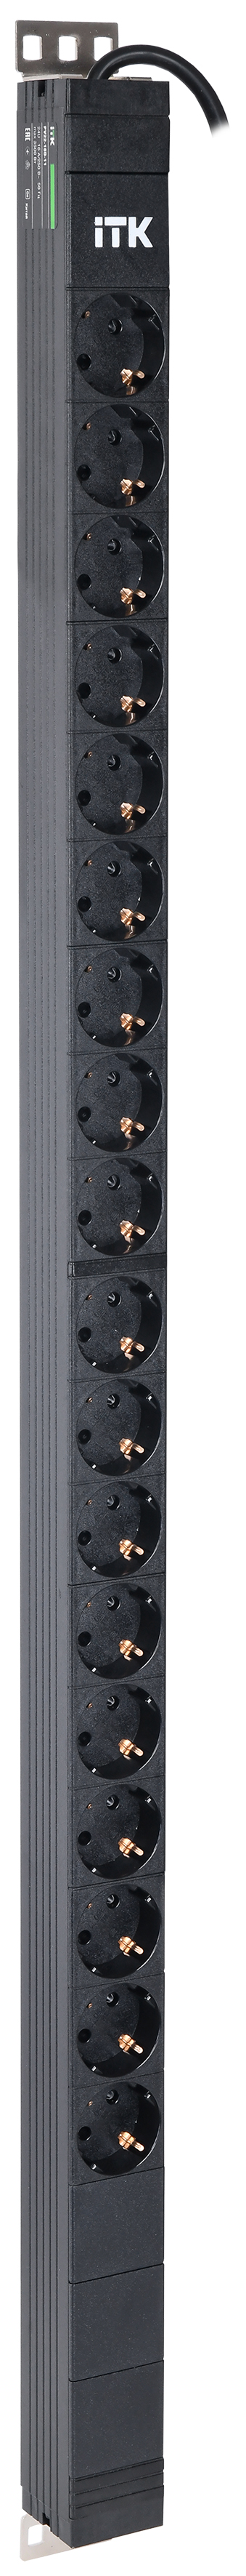 ITK PDU вертикальный 24U 1 фаза 16А 18 розеток Schuko (немецкий стандарт) кабель 3м вилка Schuko (немецкий стандарт)